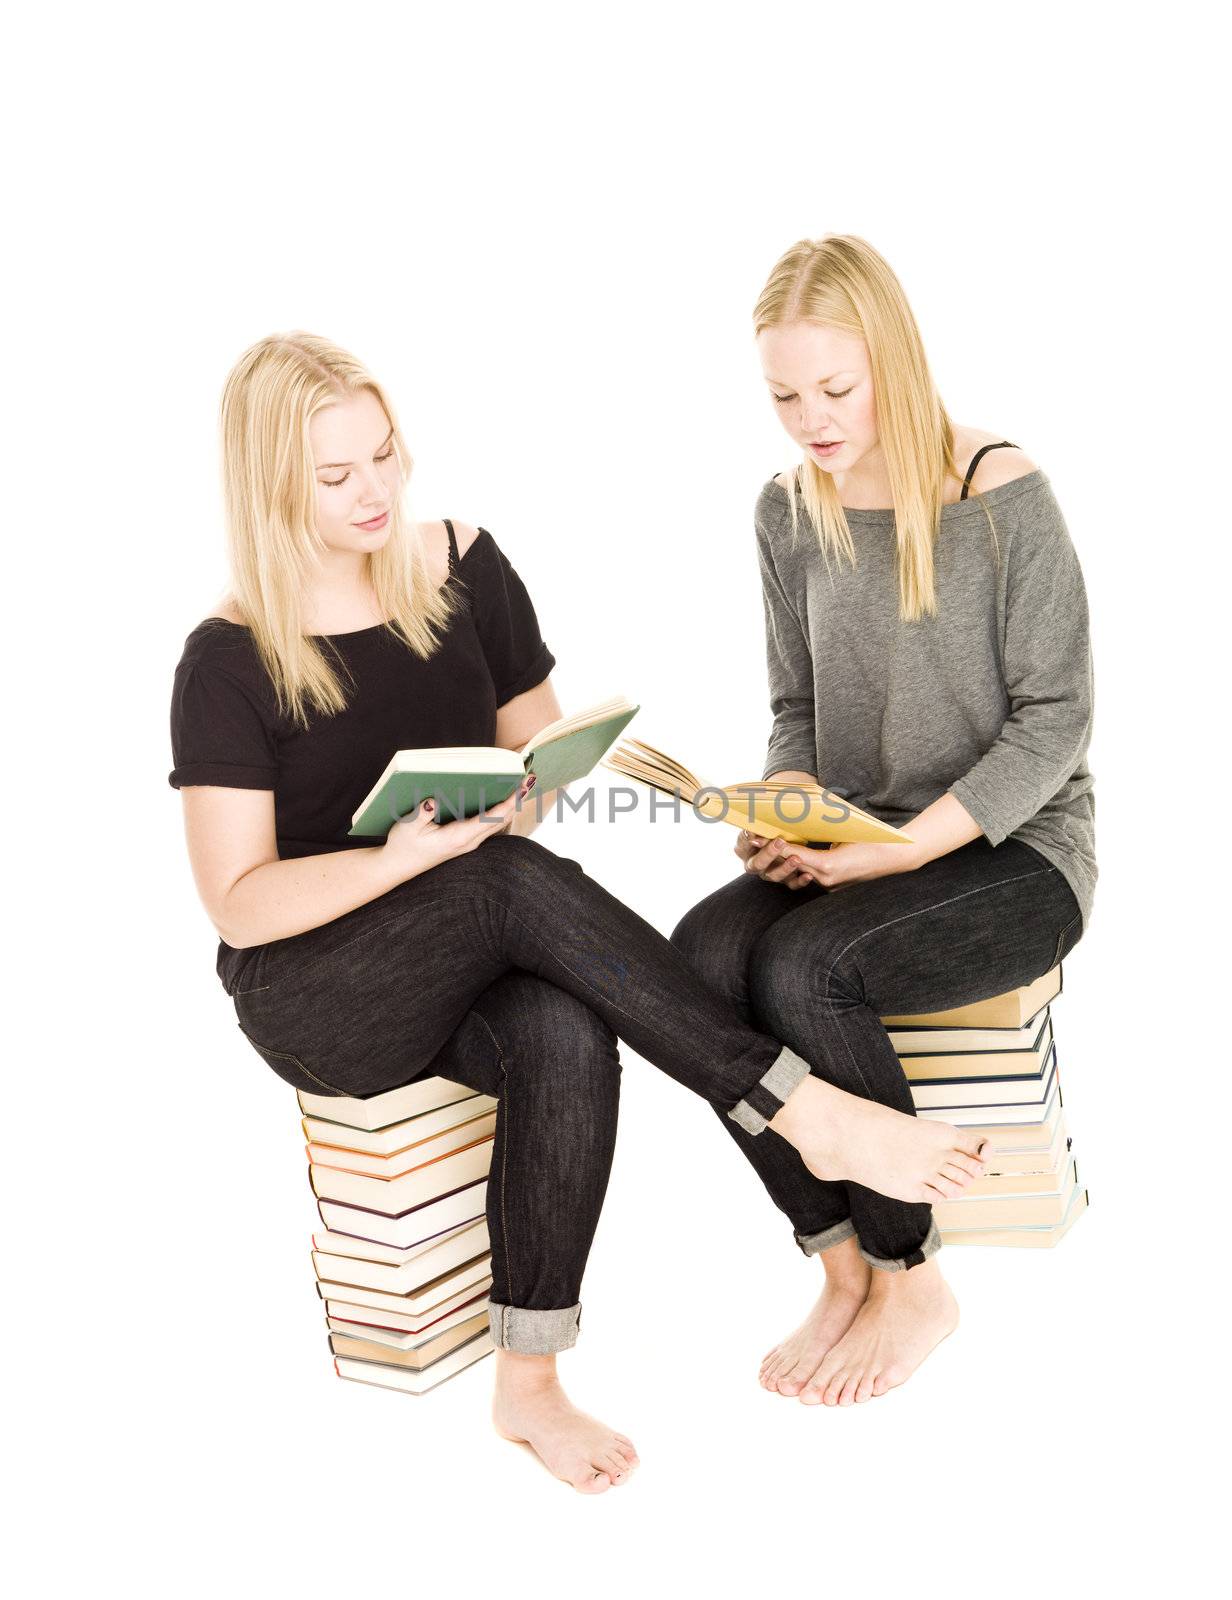 Girls sitting on piles of books by gemenacom